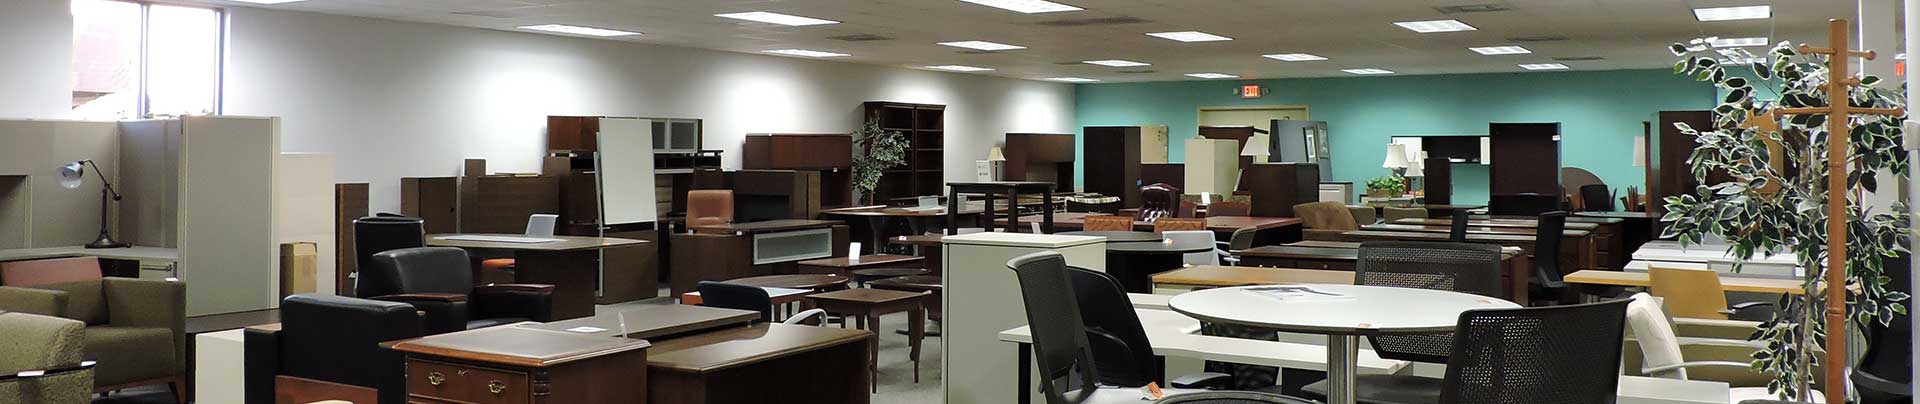 ROI Office Furniture Showroom in Richmond VA